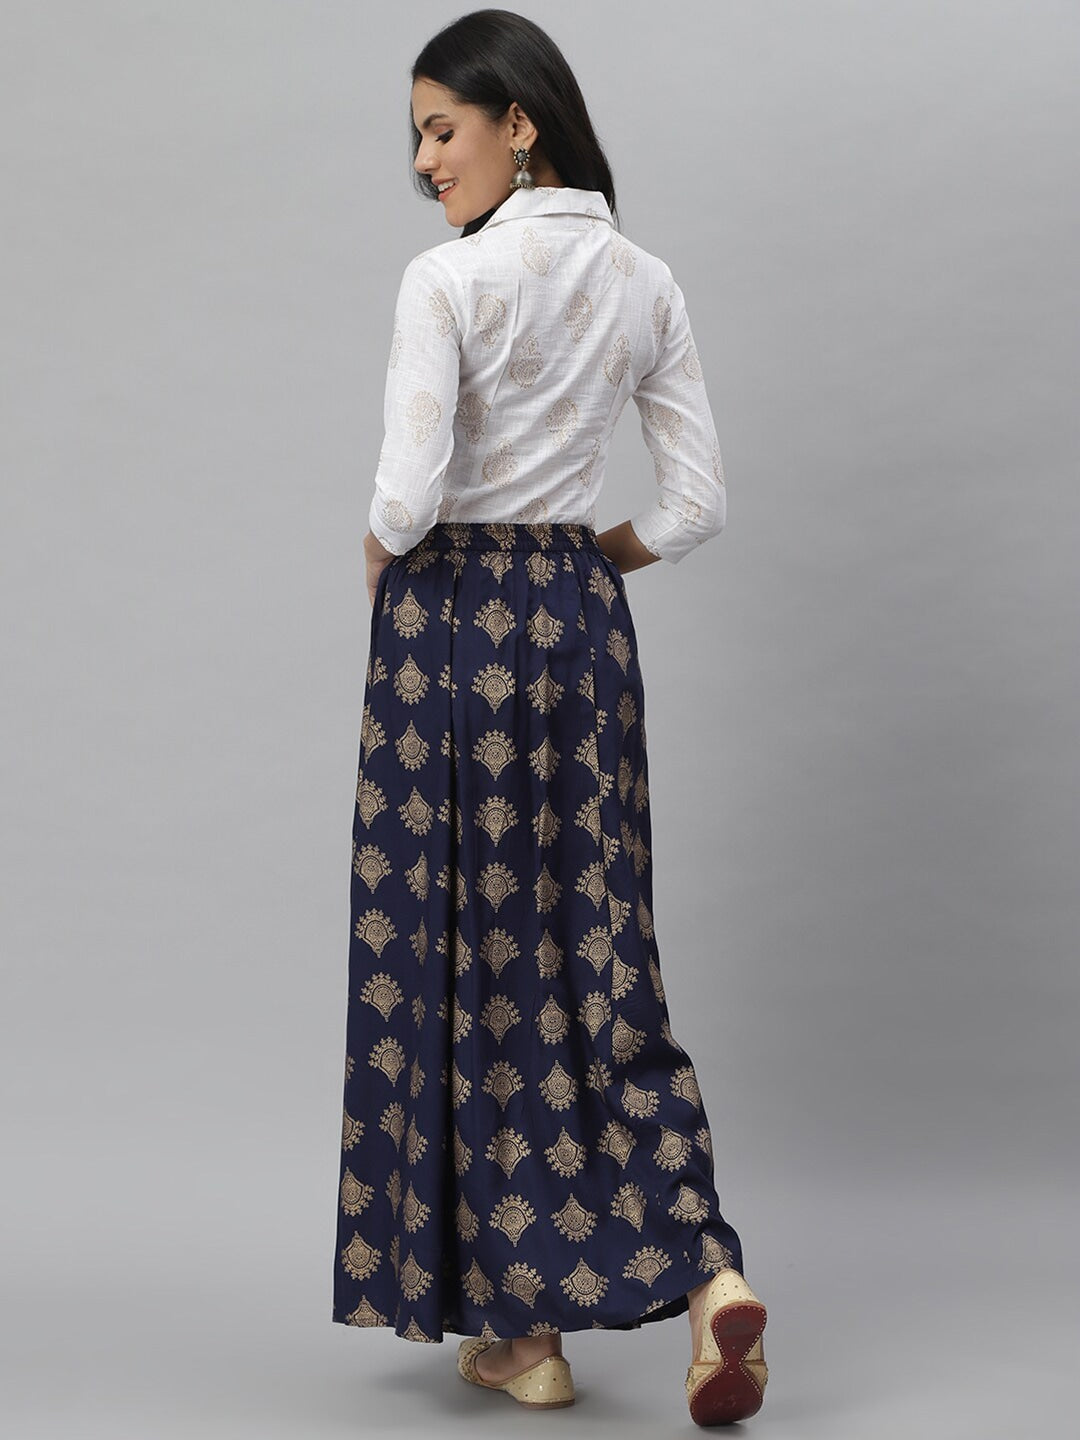 Gold Printed Rayon Shirt & Skirt Set (Off White,Blue)